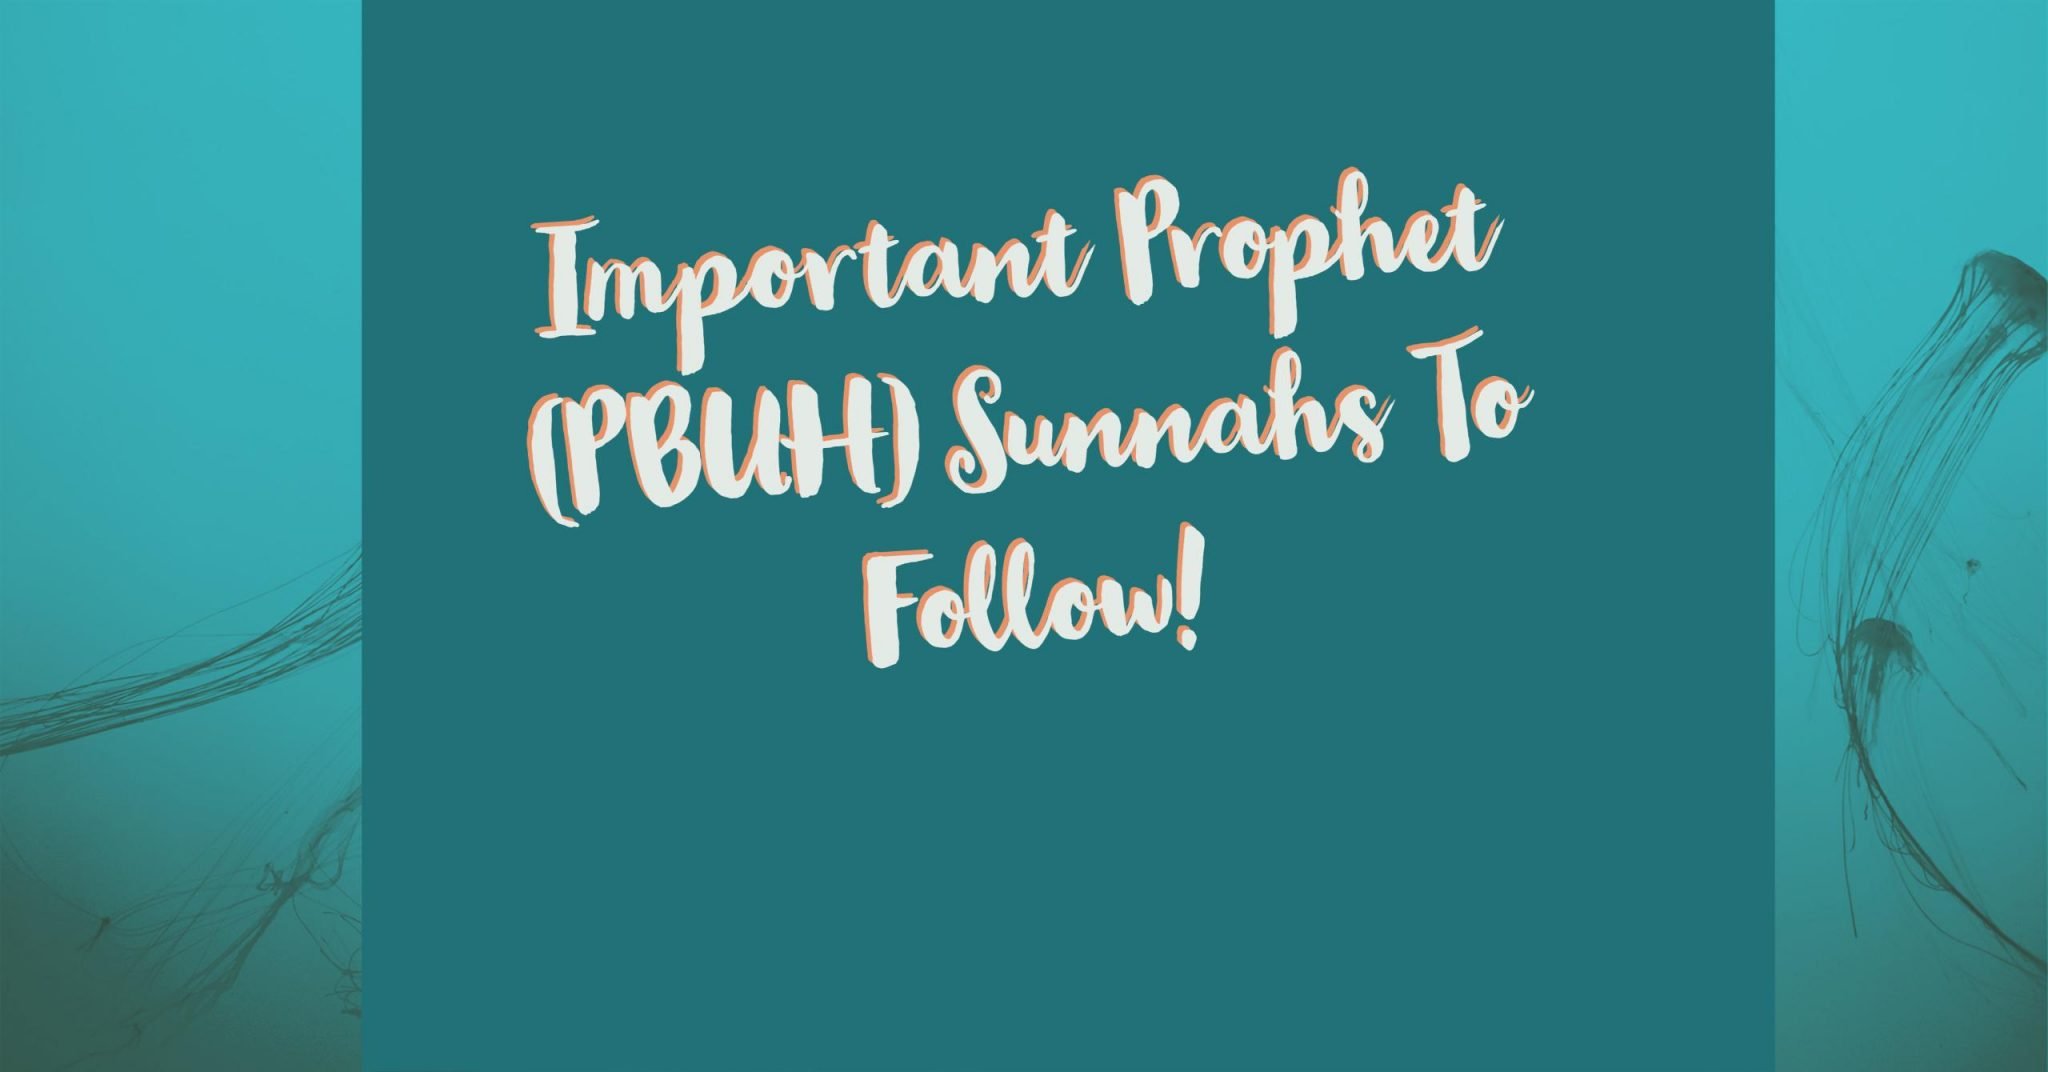 12 Important Sunnahs Every Muslim Should Follow